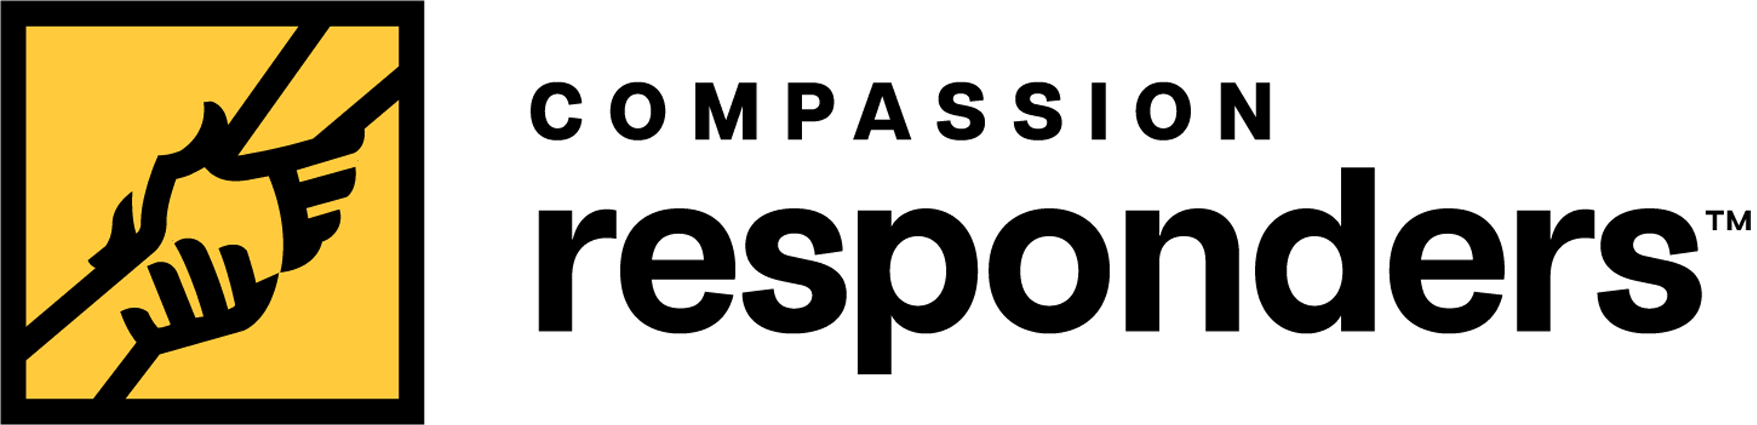 Compassion Responders logo full